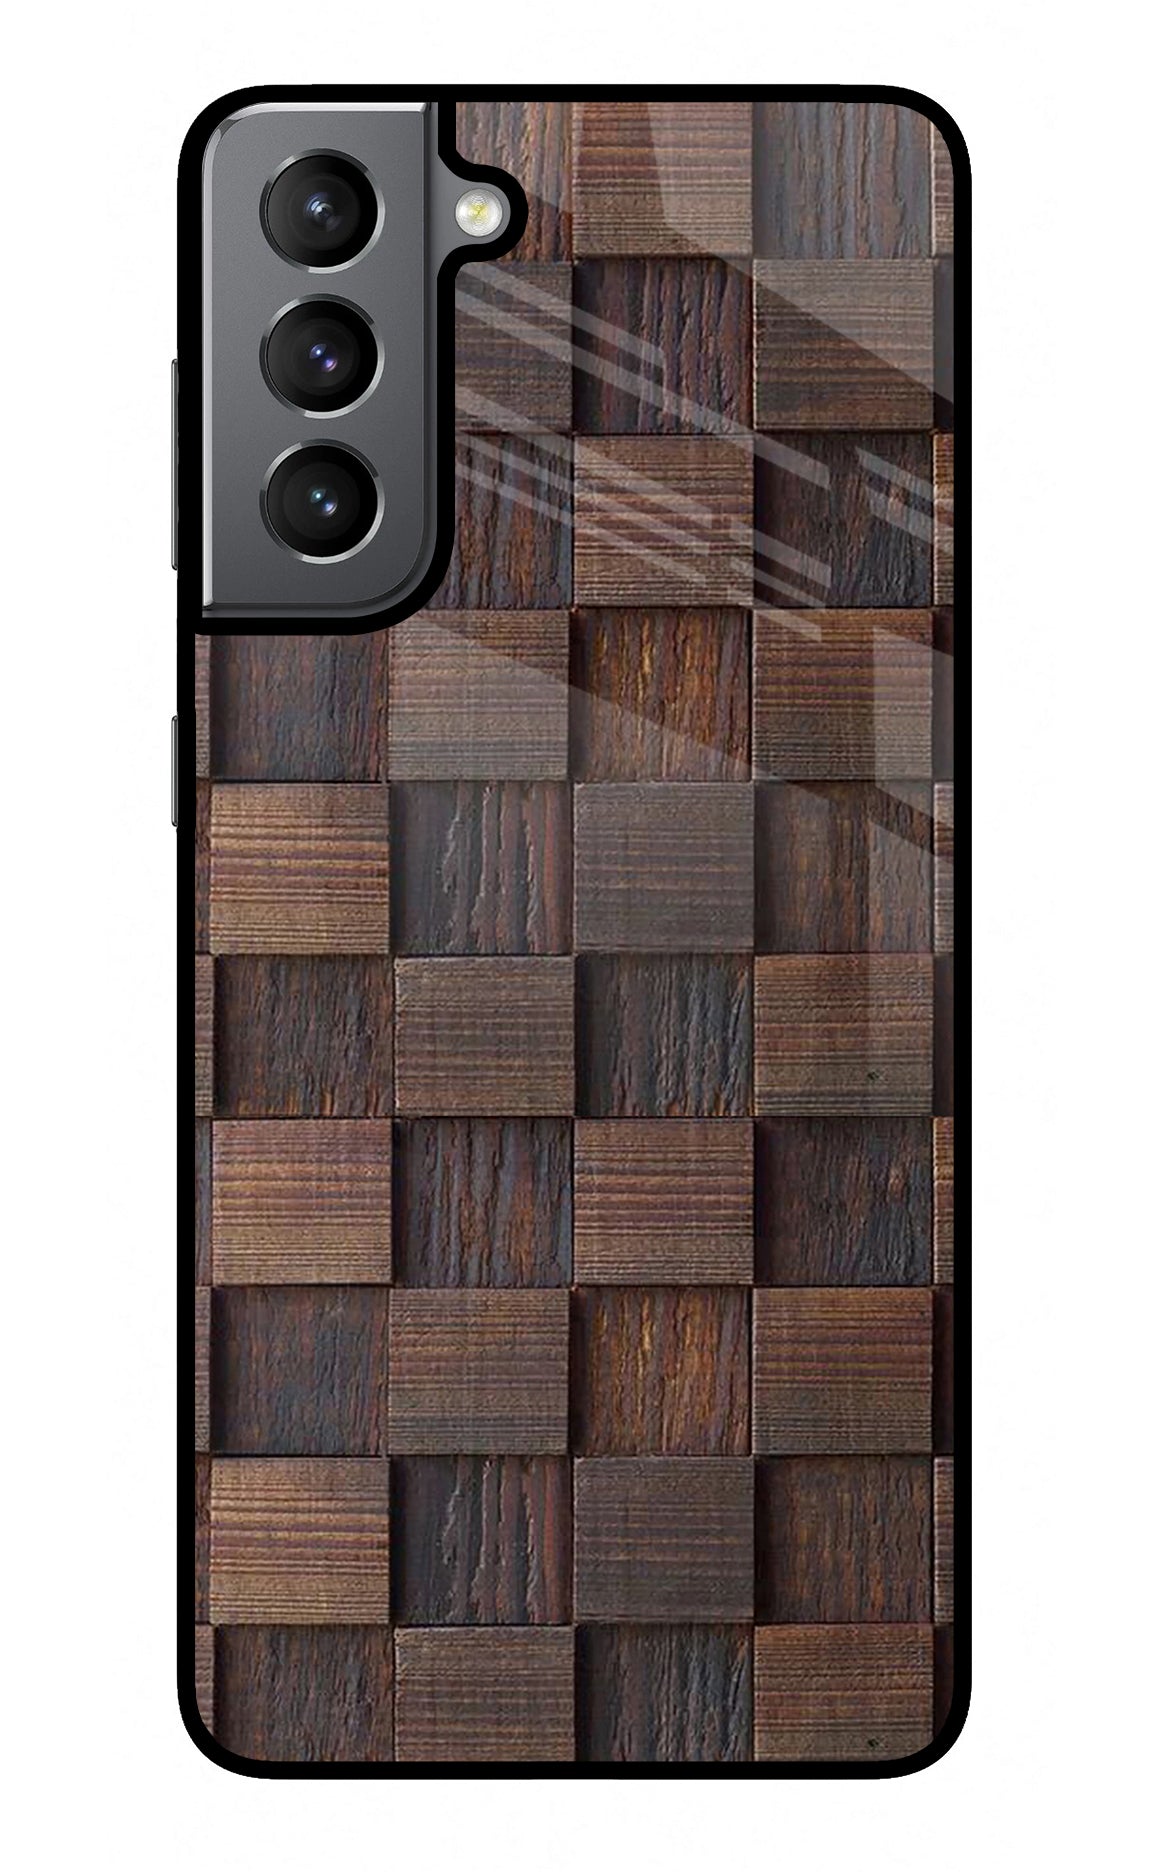 Wooden Cube Design Samsung S21 Glass Case